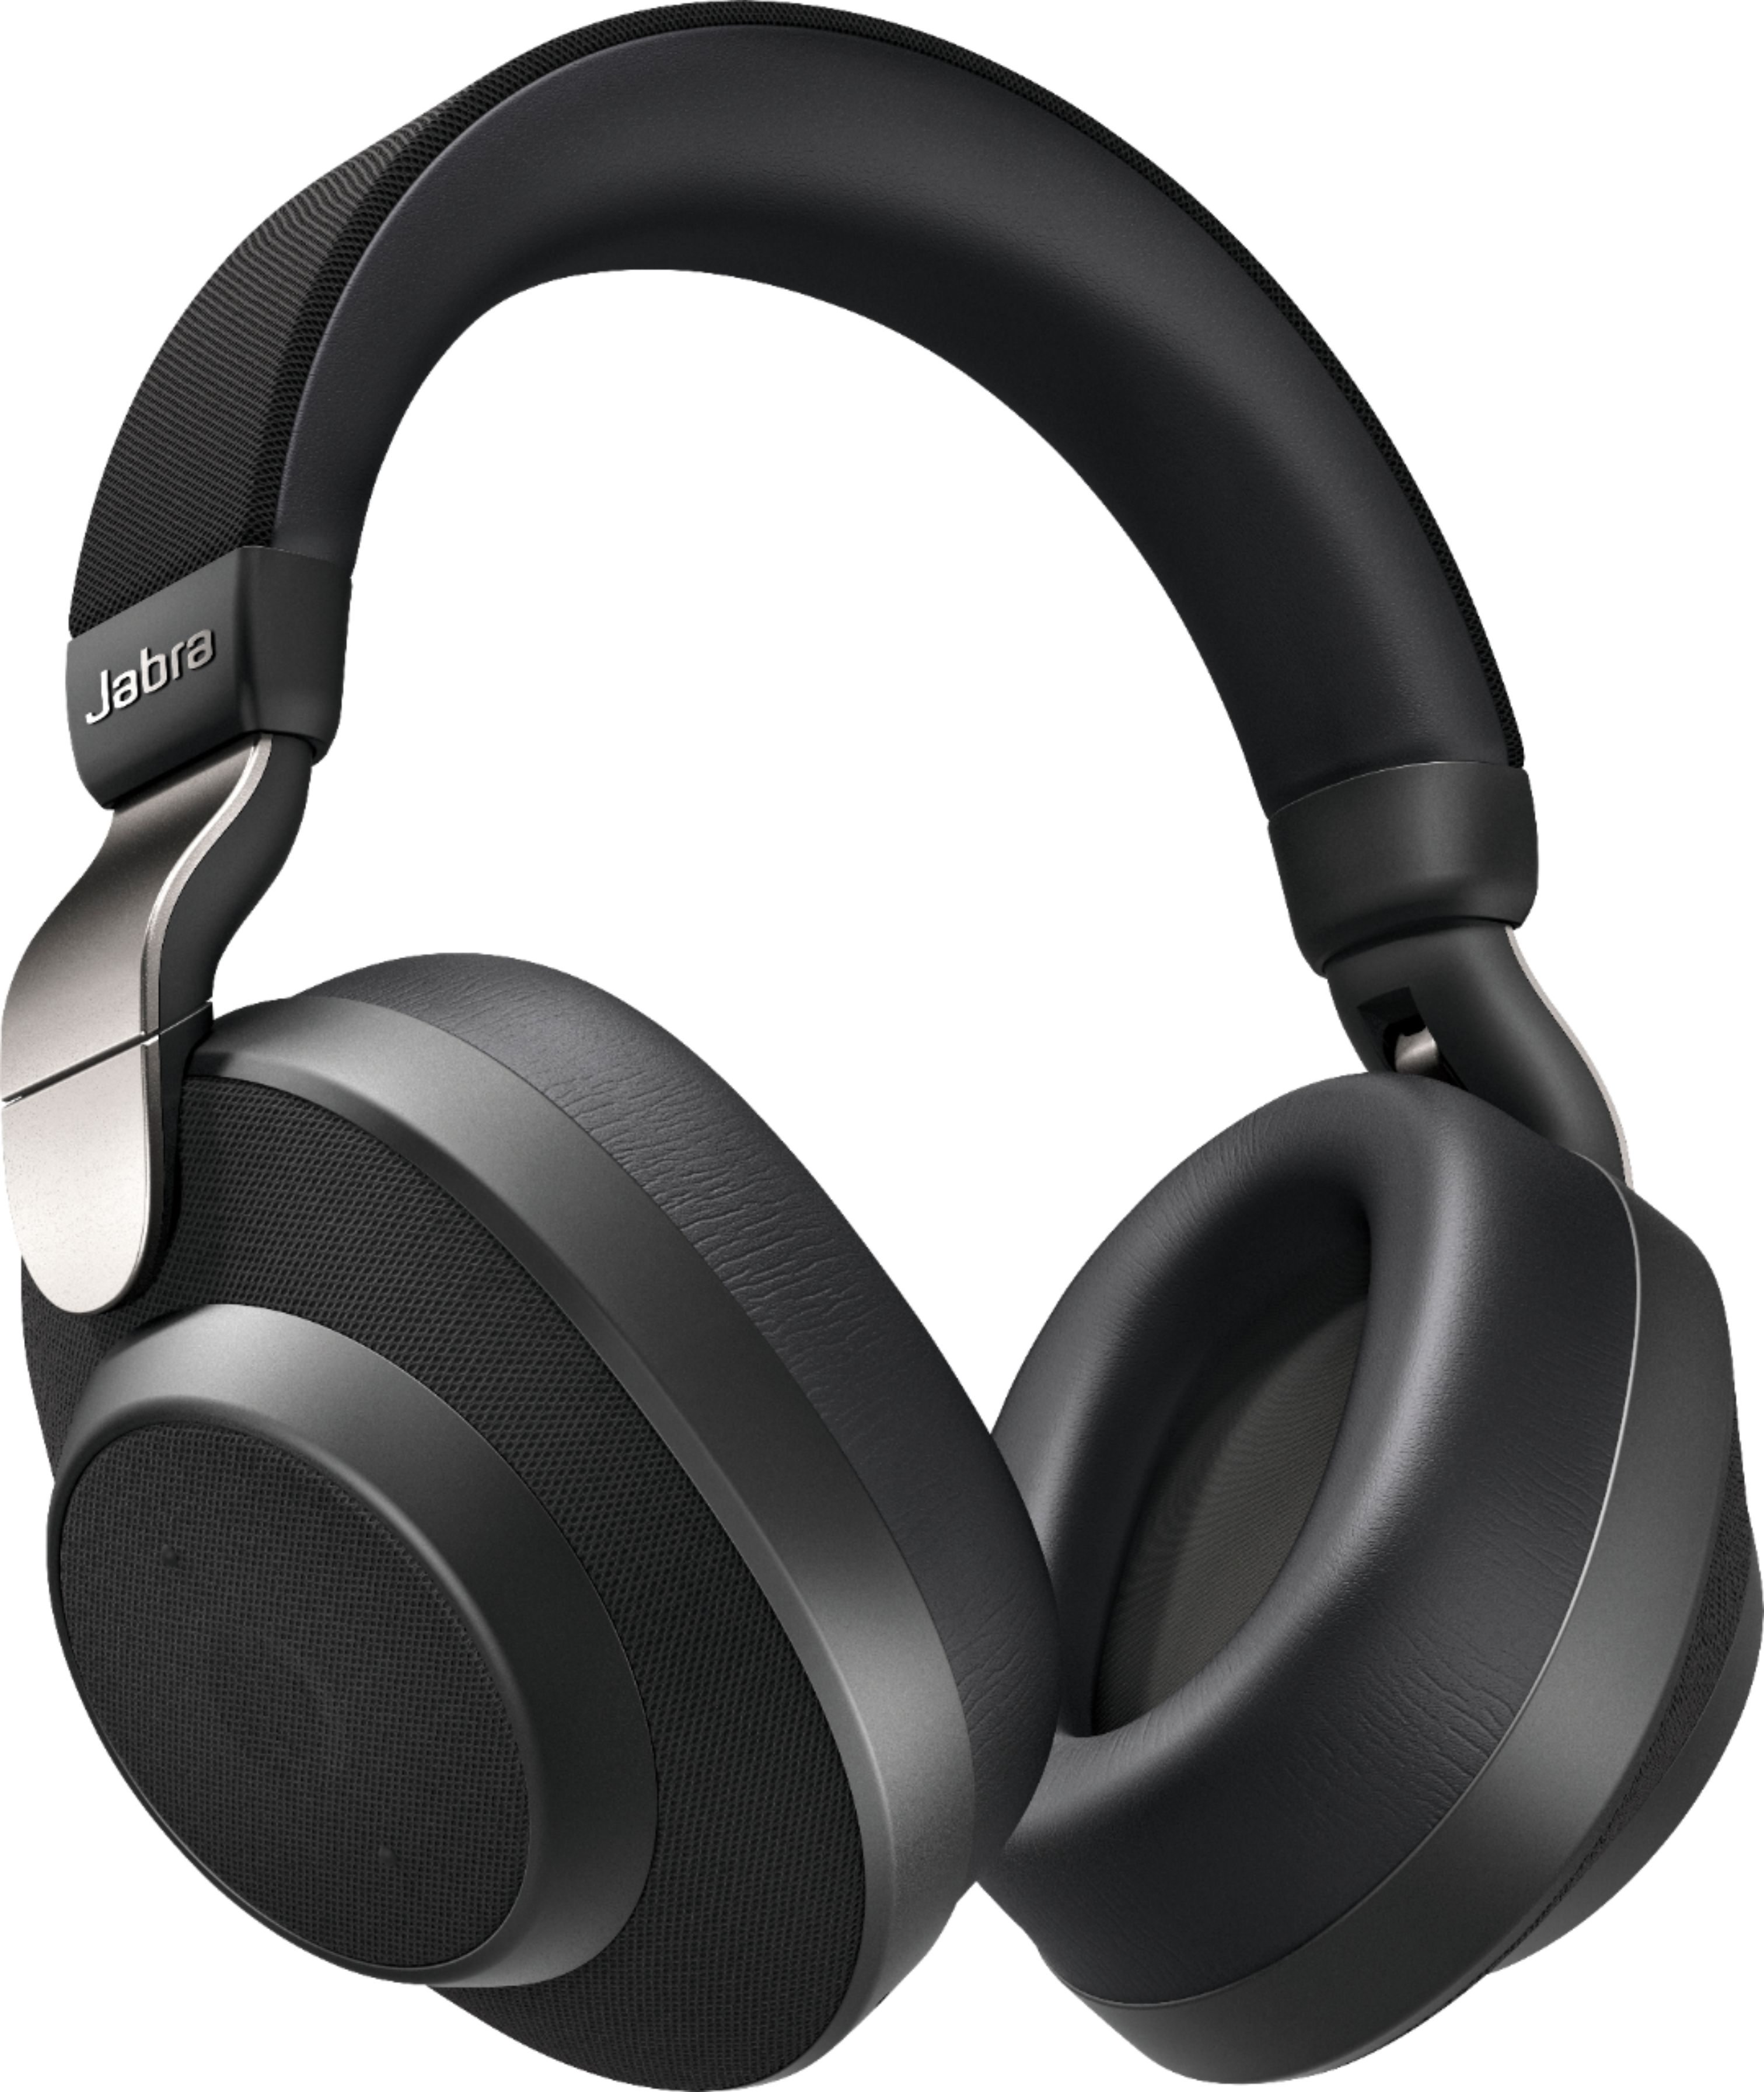 Angle View: Sony - WH-XB700 Wireless On-Ear Headphones - Black